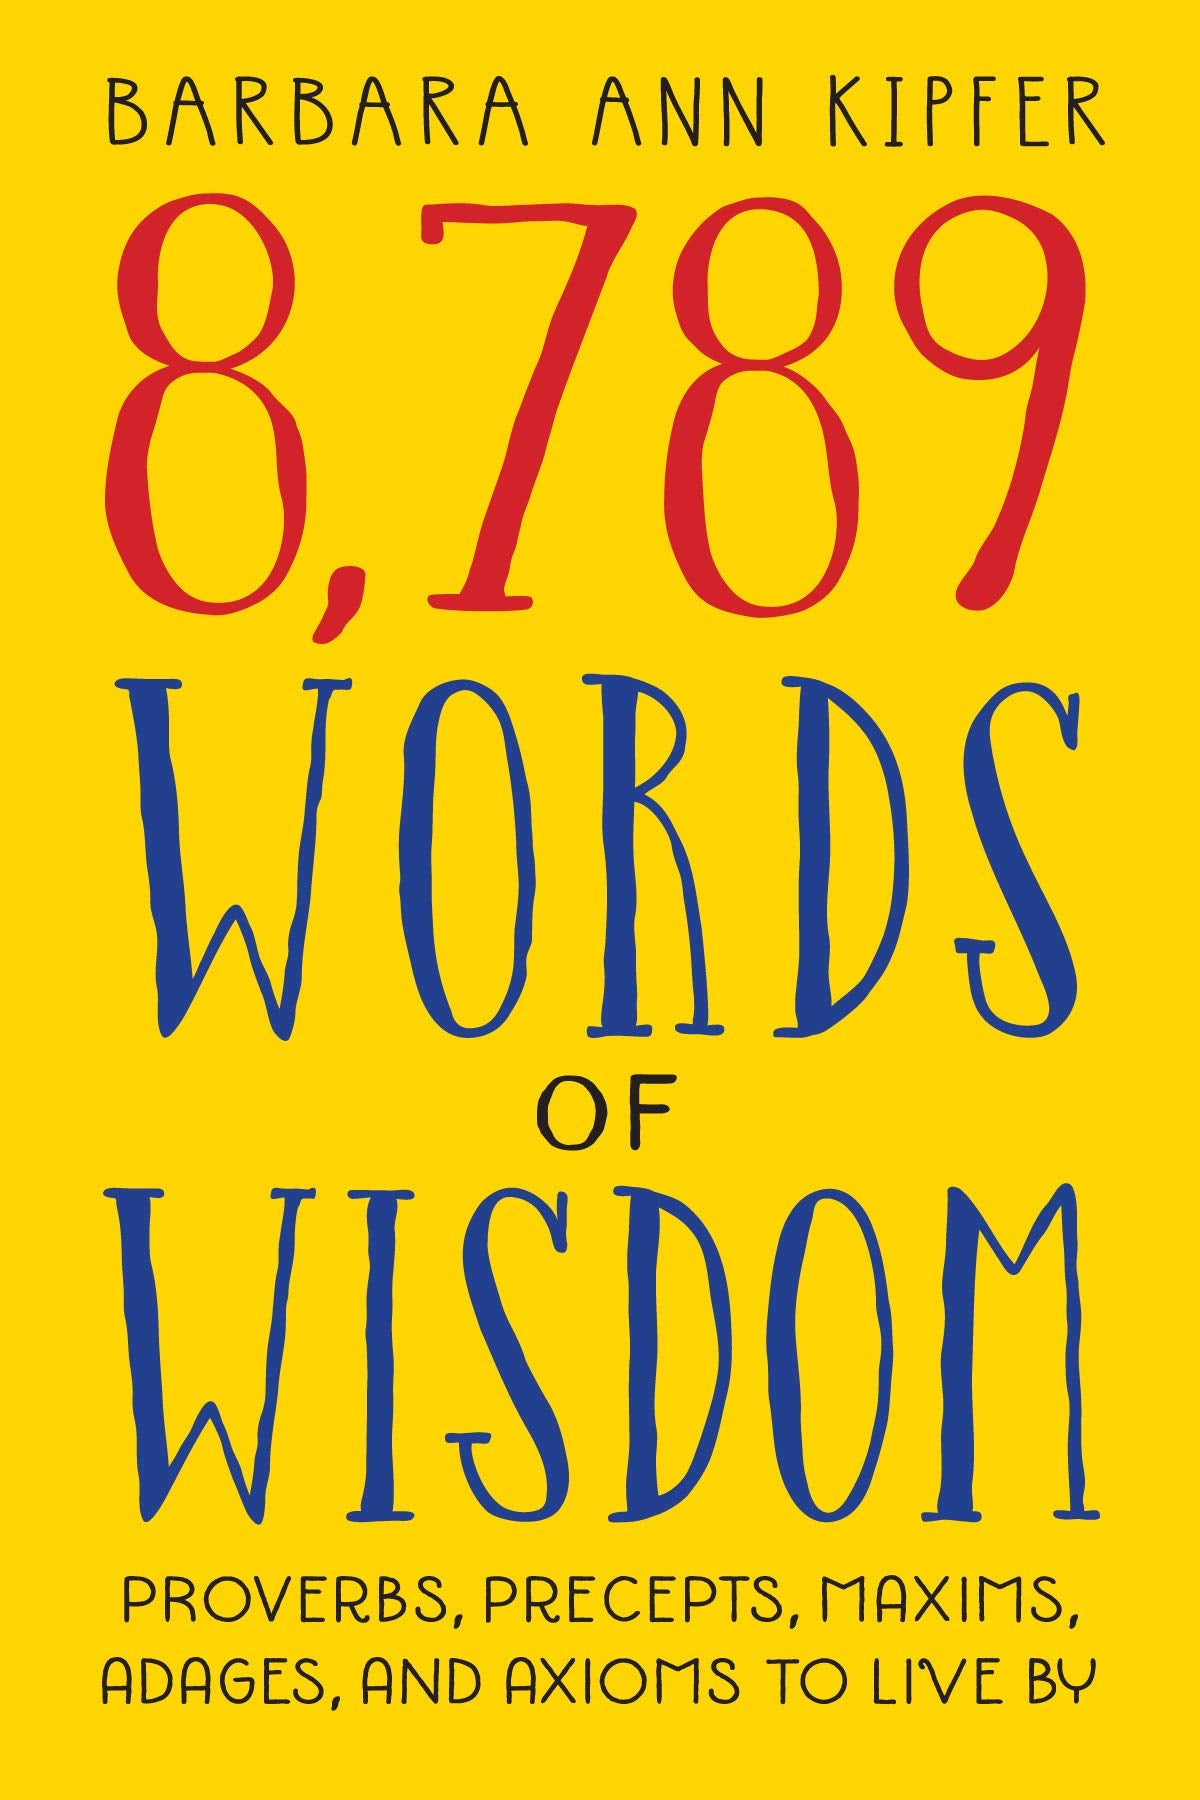 8,789 Words of Wisdom - SureShot Books Publishing LLC